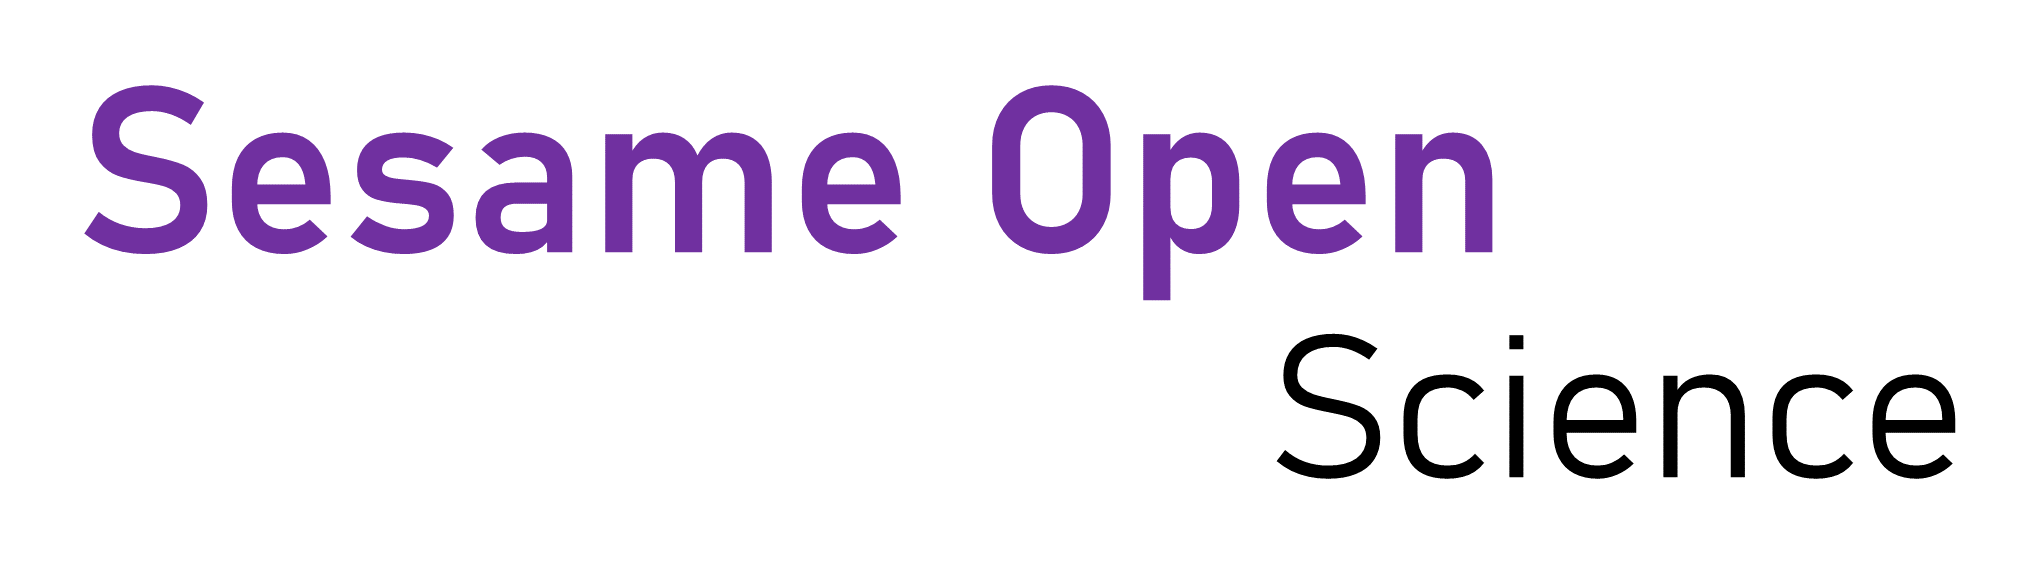 Sesame Open Science